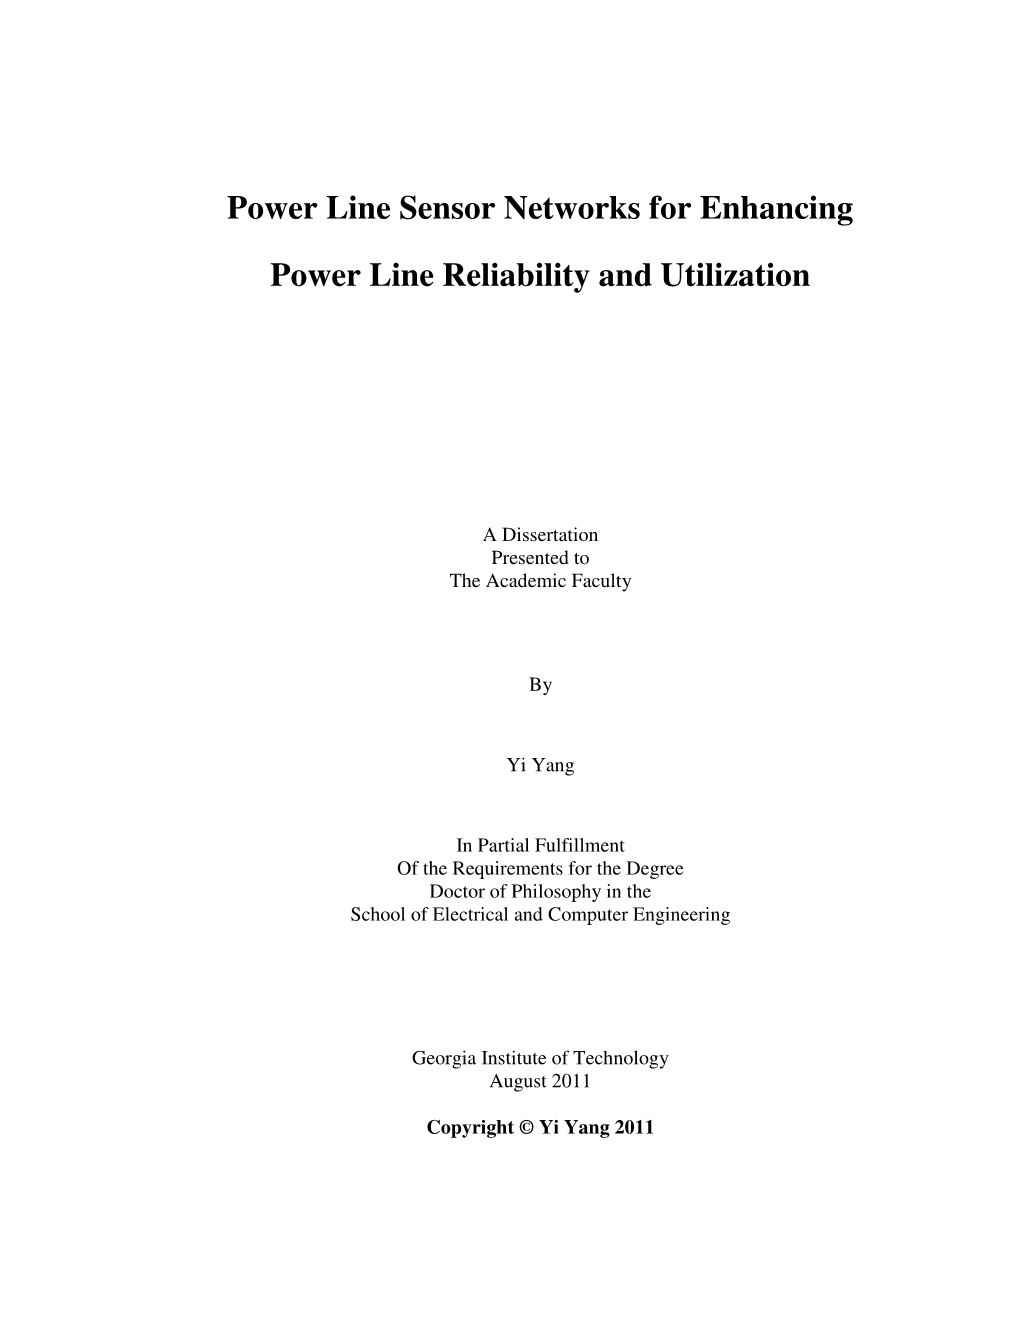 Power Line Sensor Networks for Enhancing Power